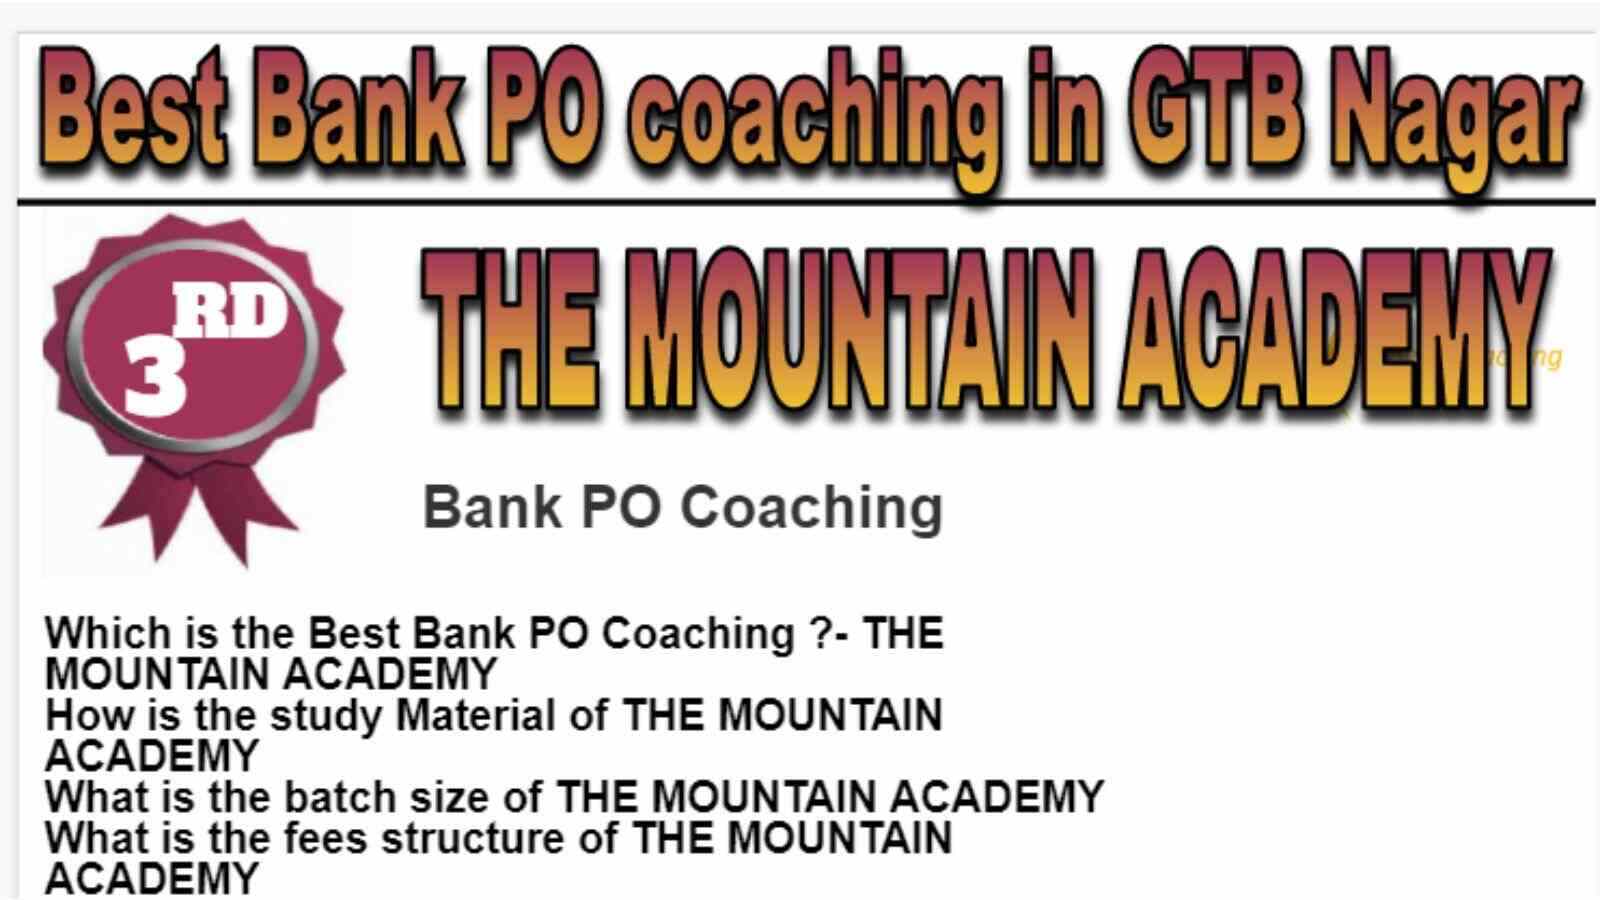 Rank 3 Best Bank PO Coaching in GTB Nagar